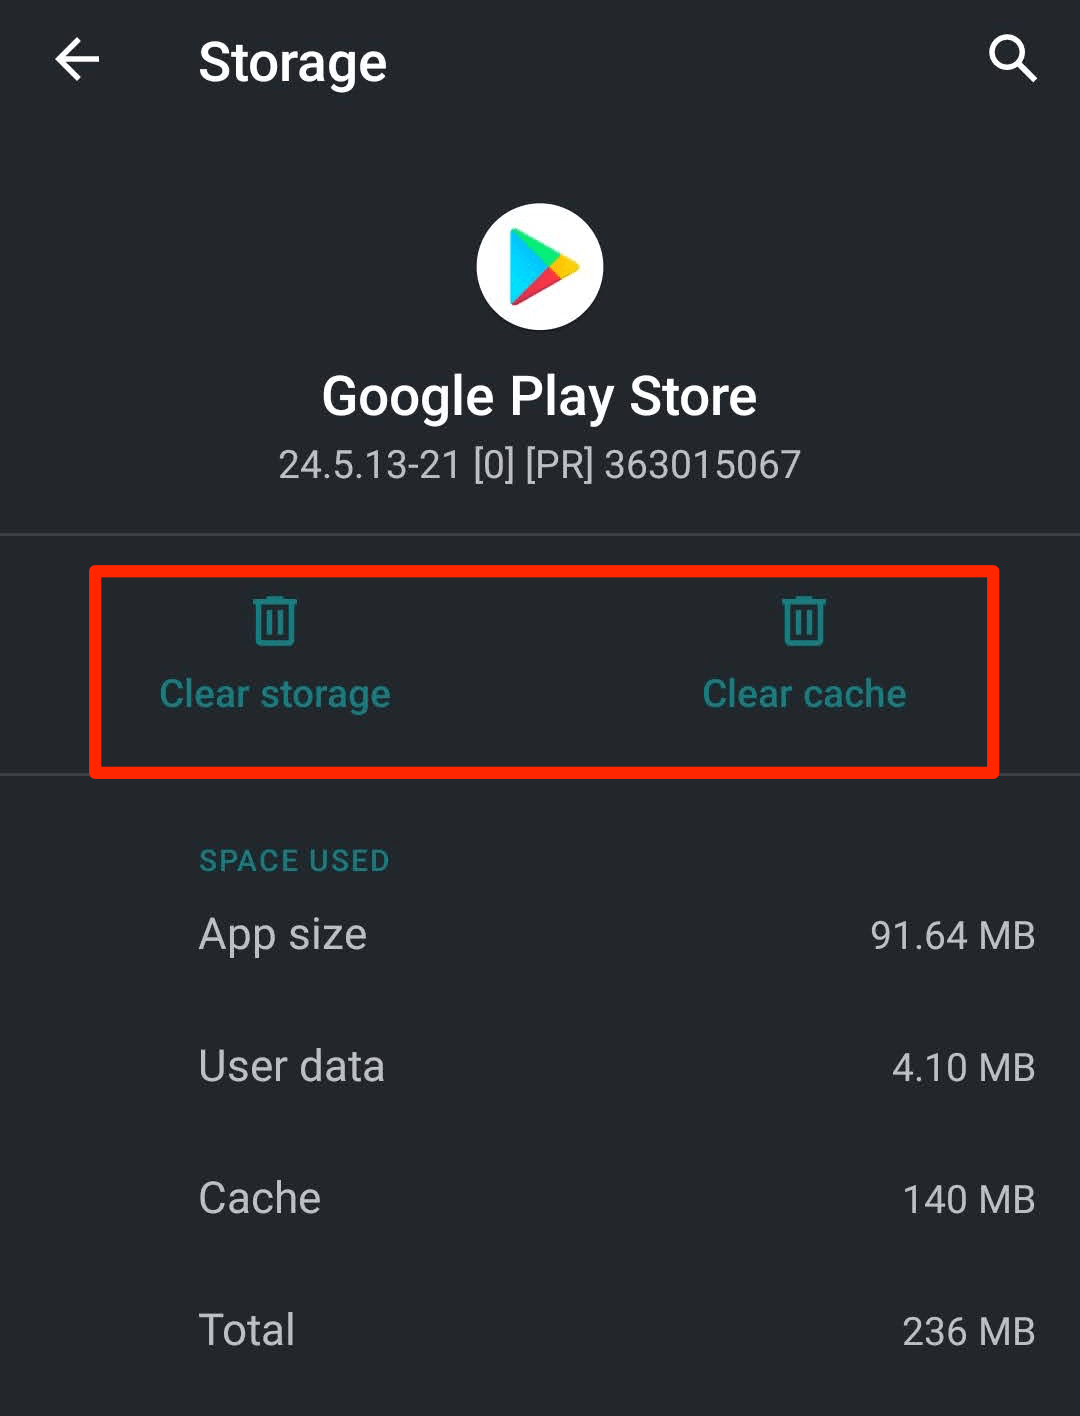 Bot贸n Borrar cach茅 y Borrar almacenamiento de Google Play Store